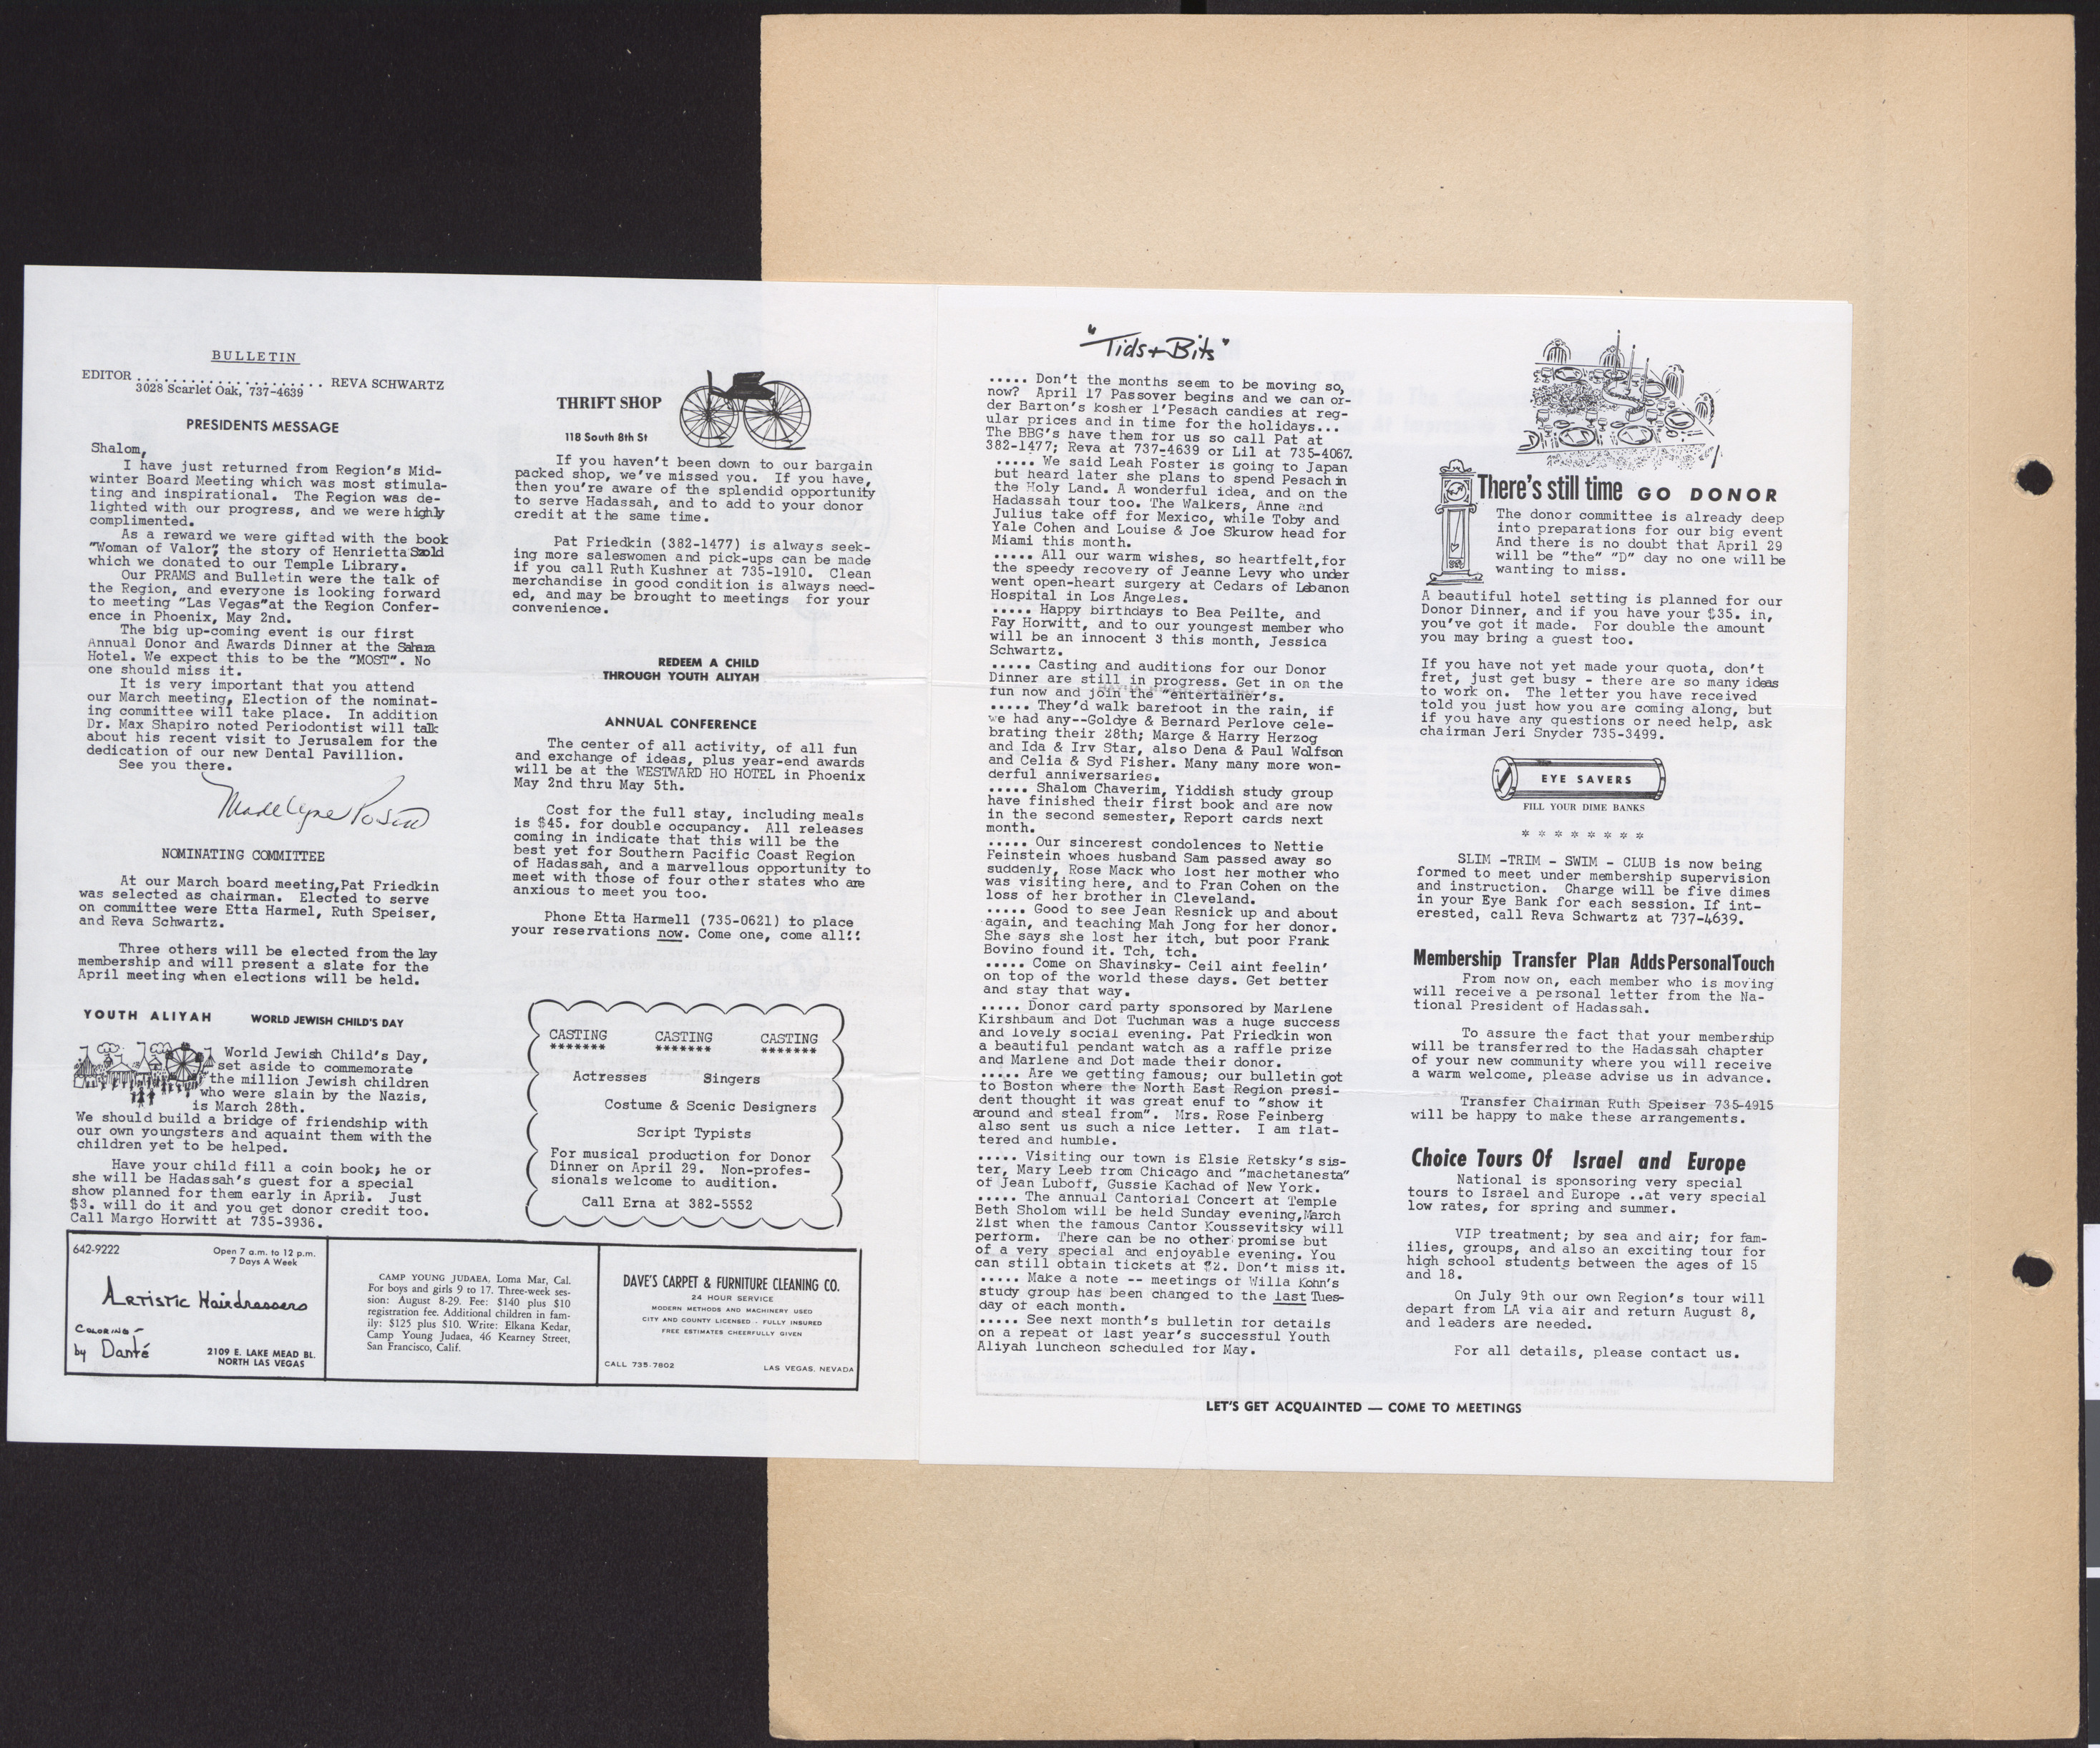 Hadassah Las Vegas Chapter newsletter, March 1965, 2-3